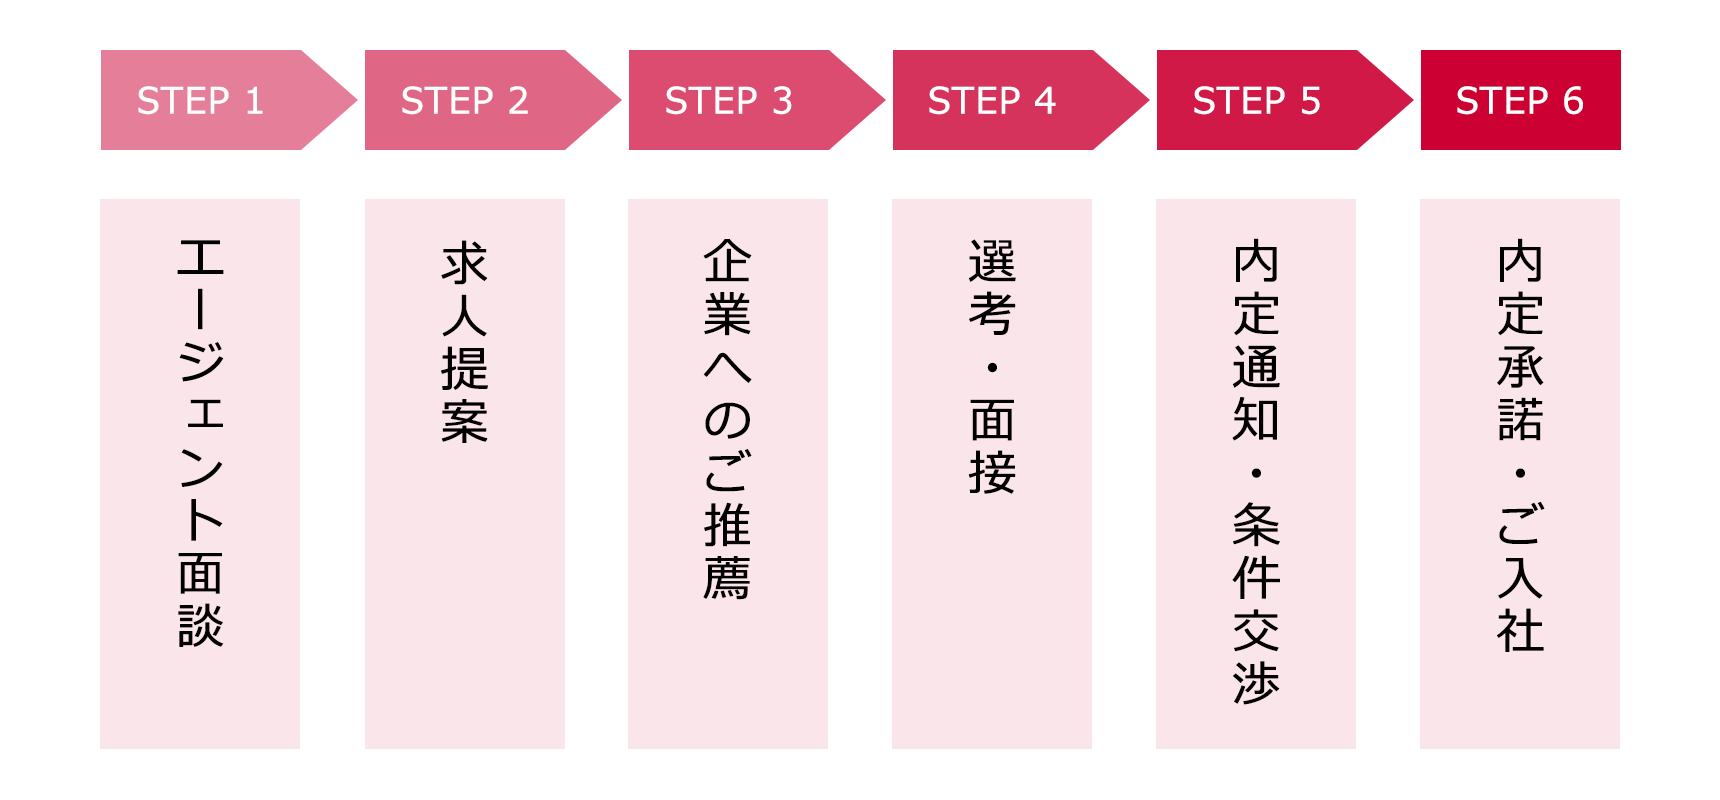 STEP 1：エージェント面談 > STEP 2：求人提案 > STEP 3：企業へのご推薦 > STEP 4：選考・面接 > STEP 5：内定通知・条件交渉 > STEP 6：内定承諾・ご入社